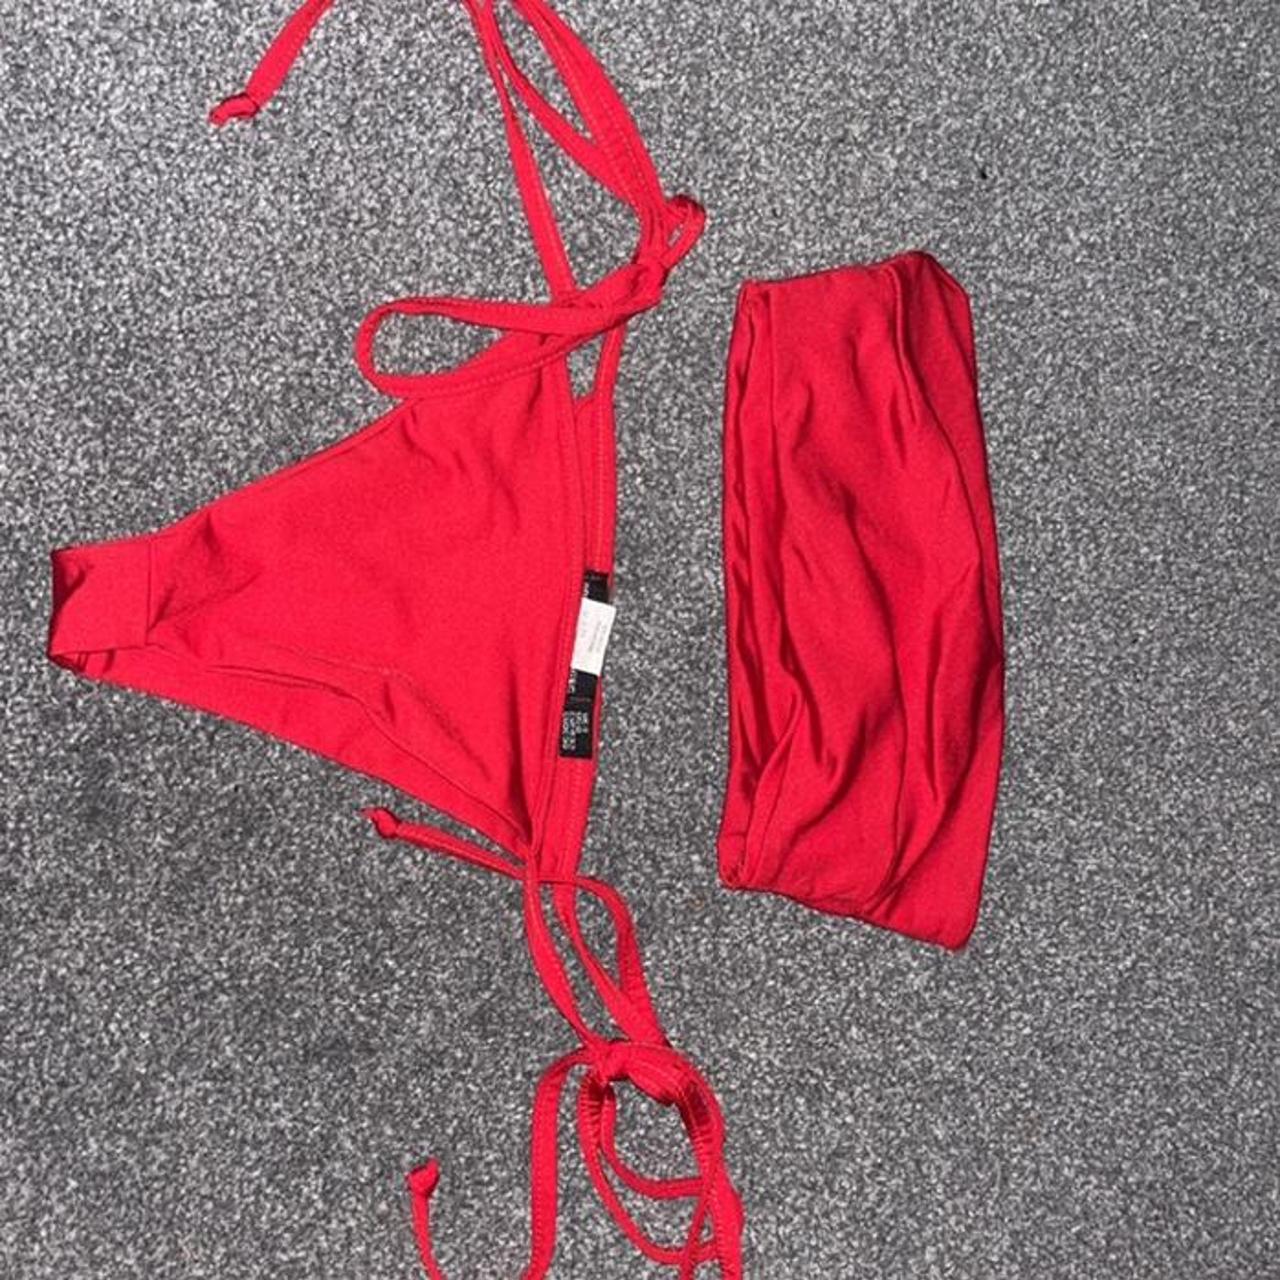 Red pretty little thing bikini set - Depop